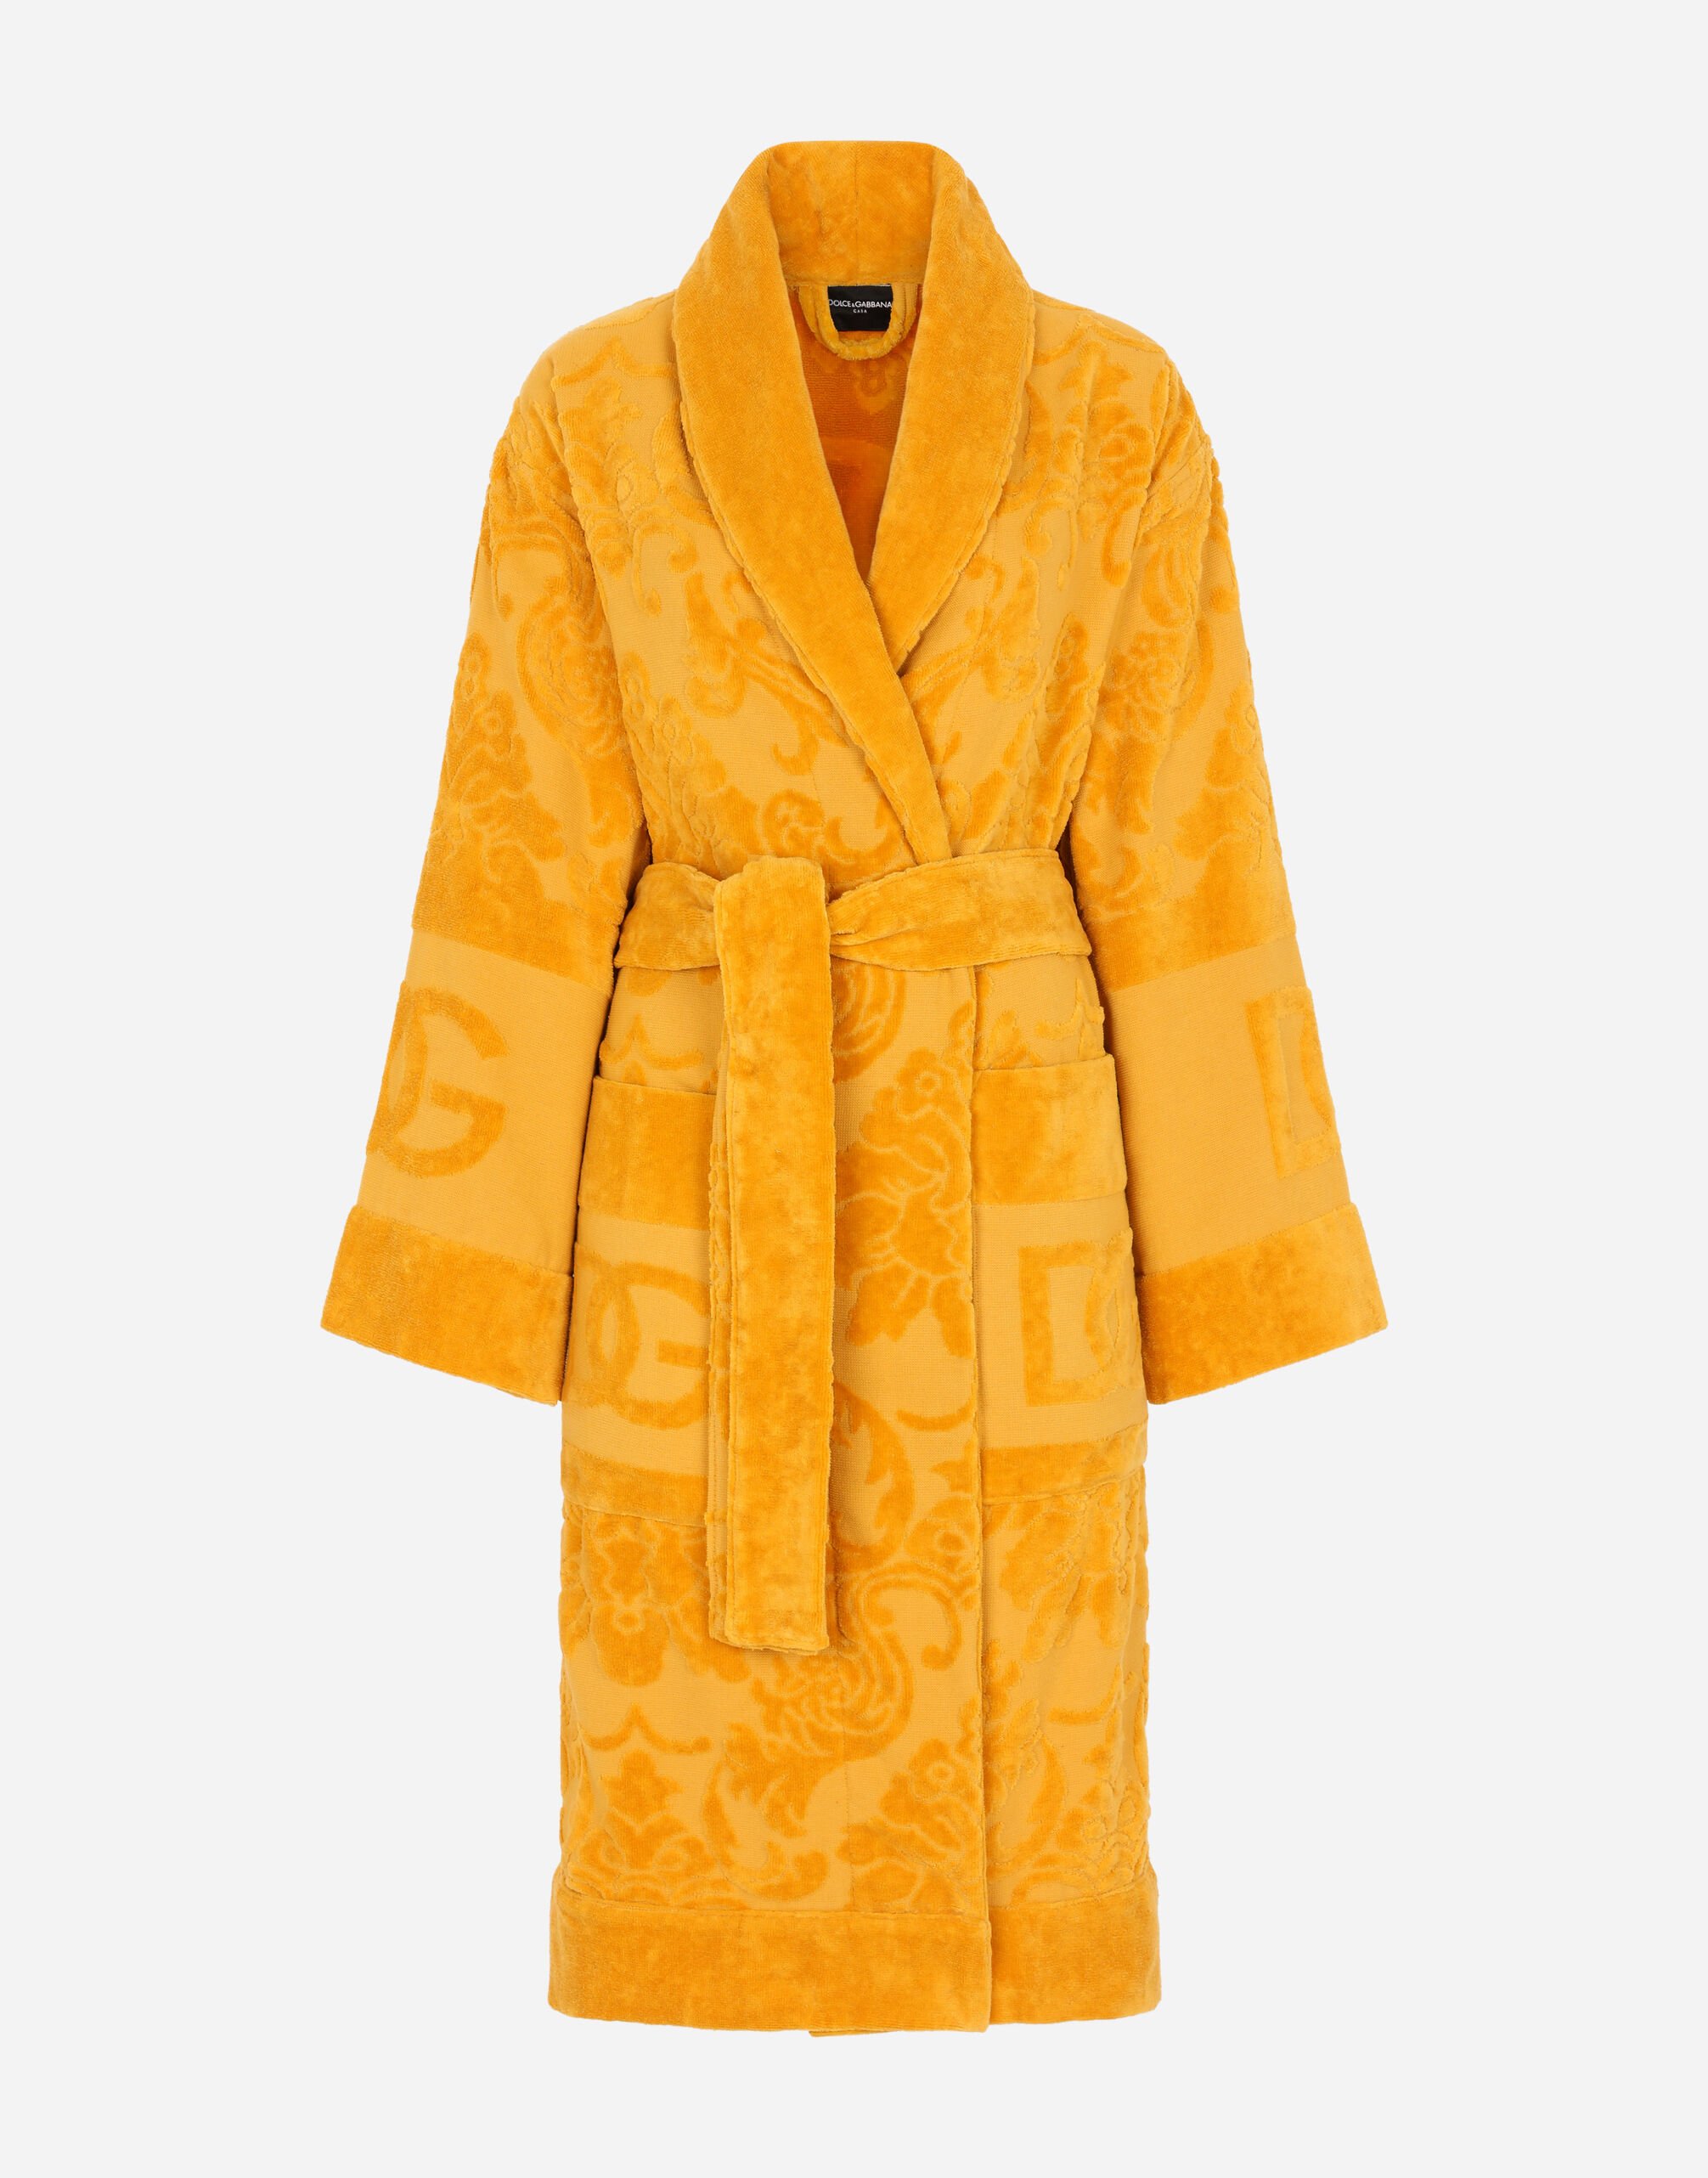 Dolce & Gabbana Bath Robe in Terry Cotton Jacquard Multicolor TCE001TCAIY